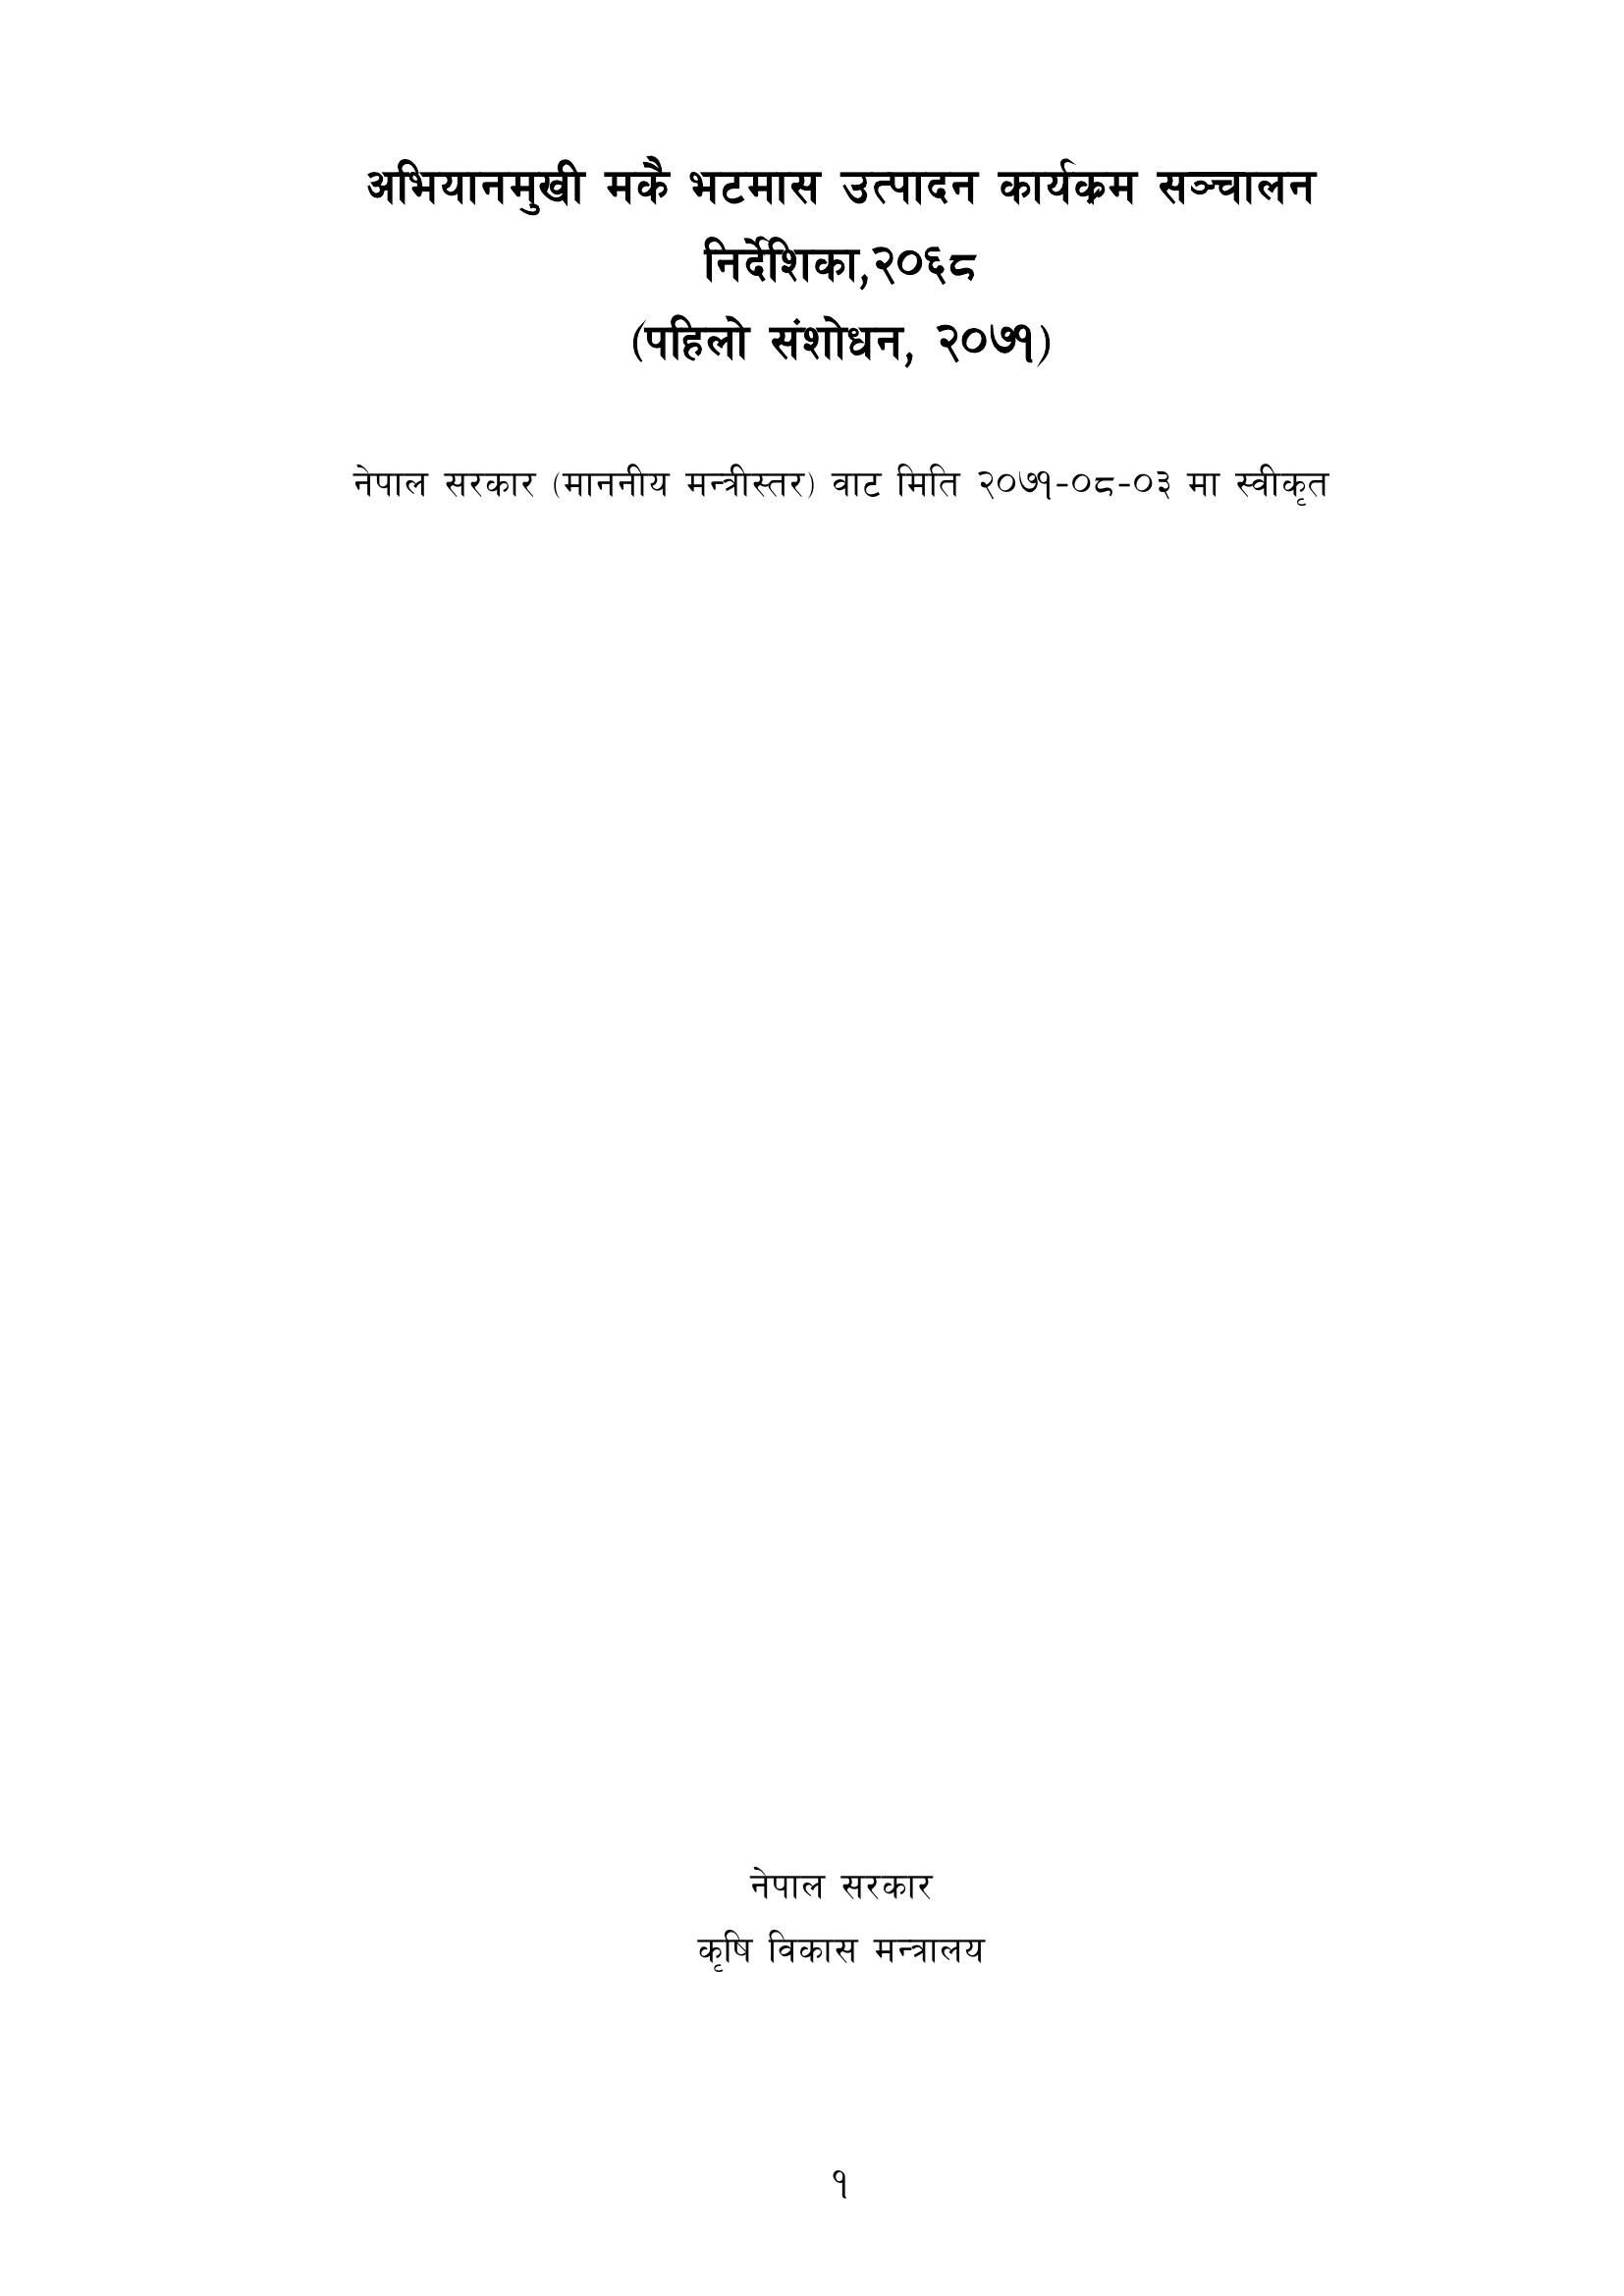 Makai bhatmas utpadan sanchalan nirdeshika 2071| Resources